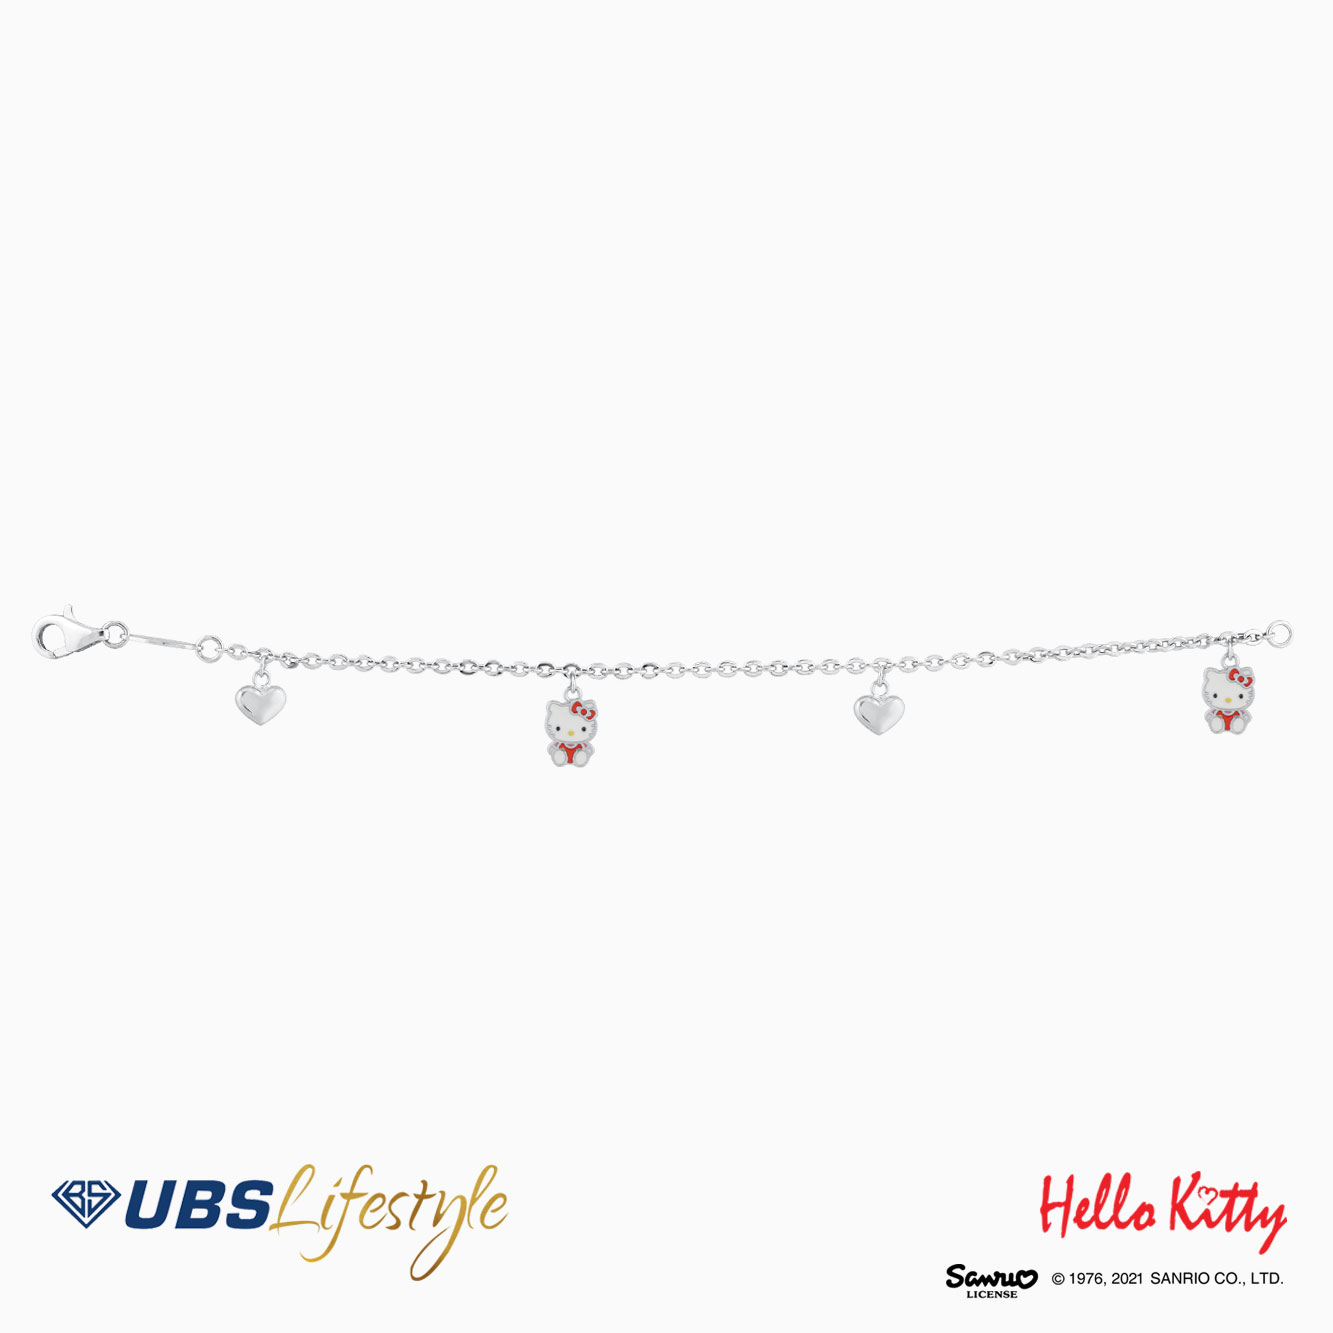 UBS Gelang Emas Anak Sanrio Hello Kitty - Hgz0046 - 17K